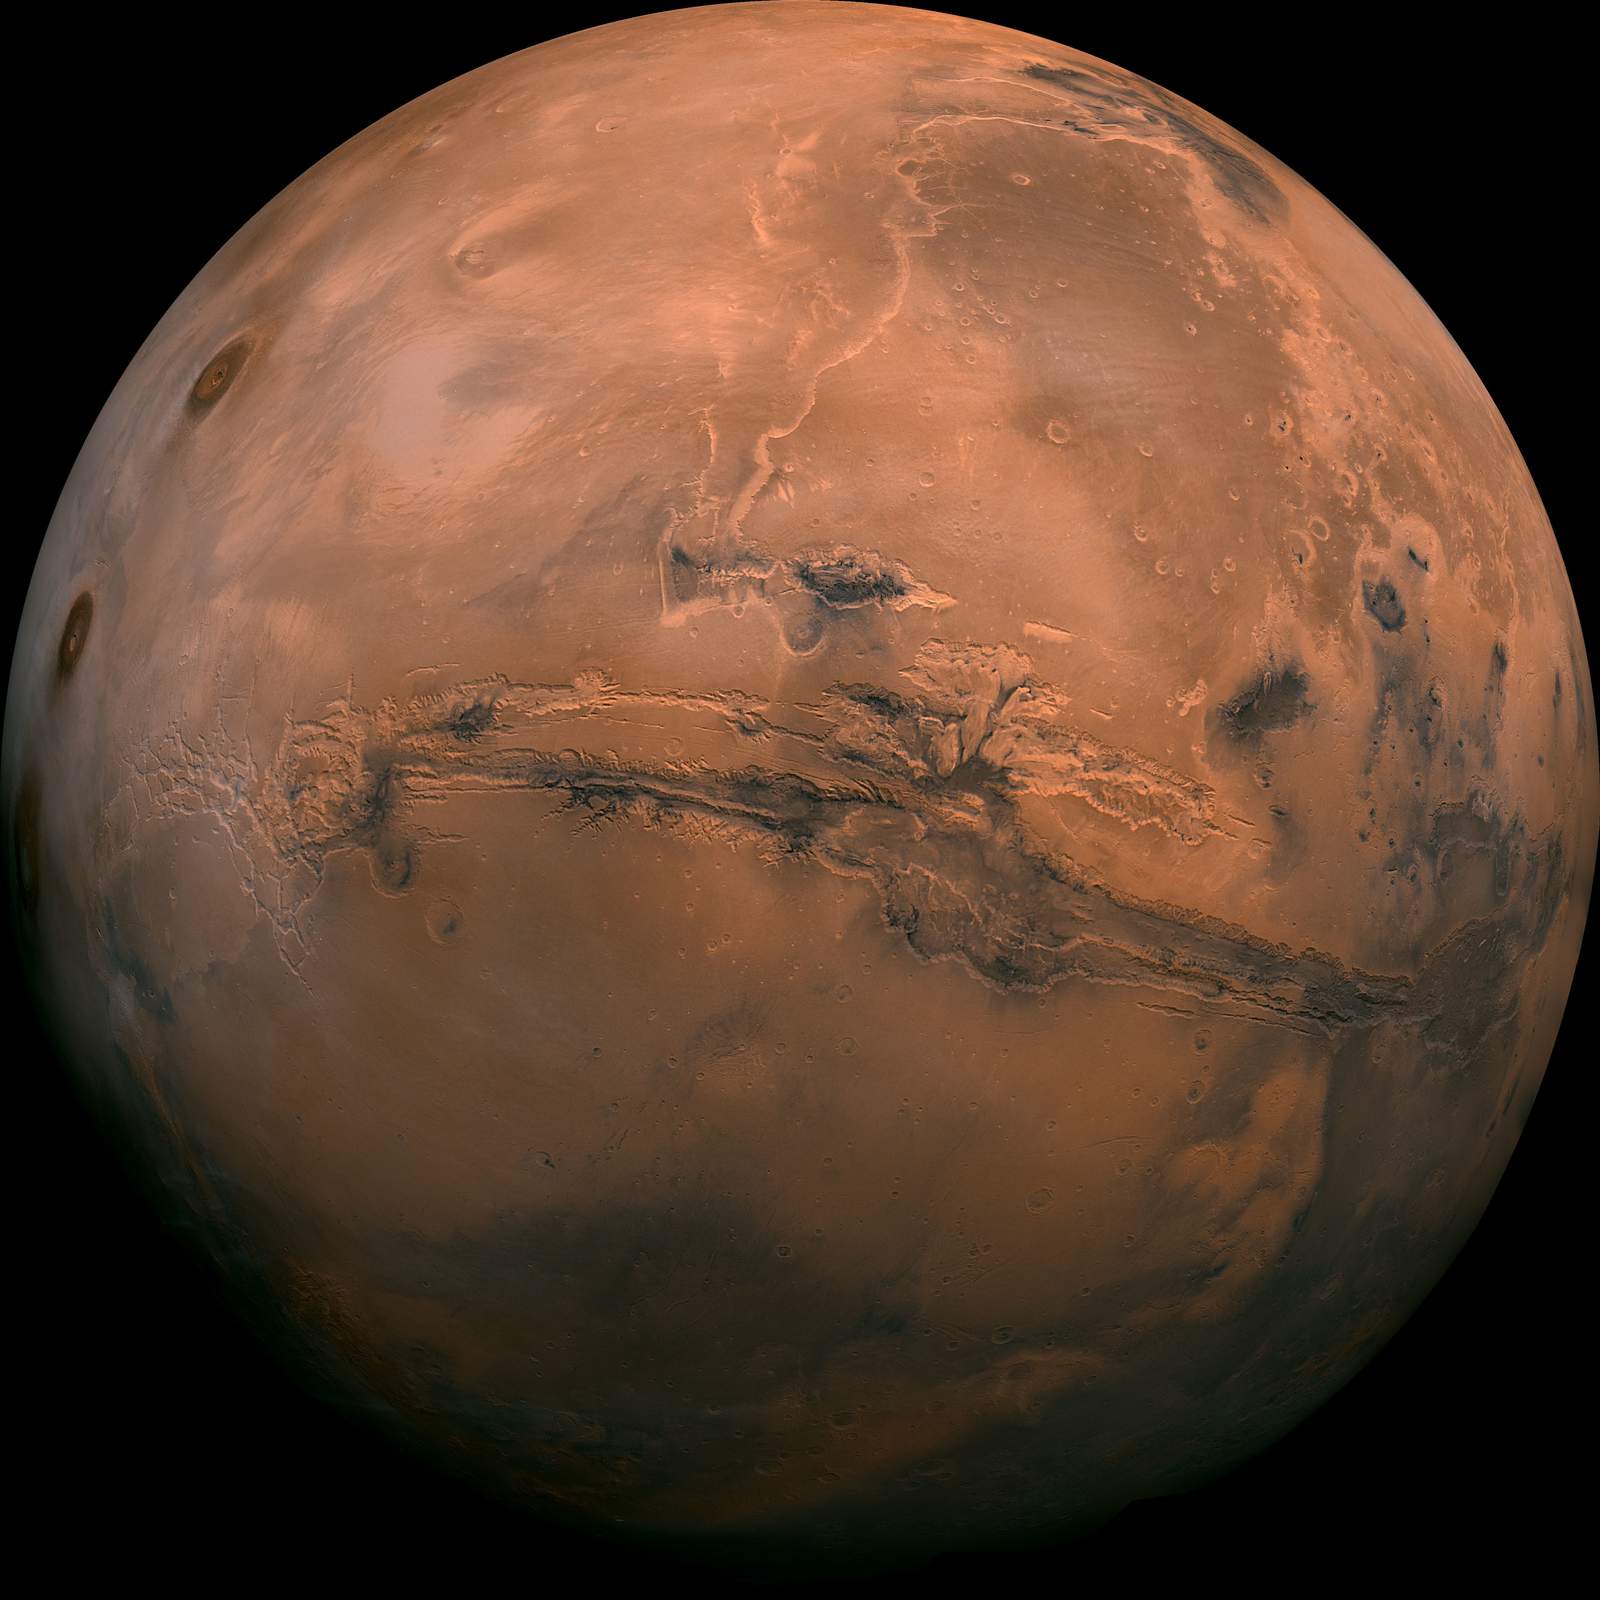 Report: NASA needs more time, money to bring back Mars rocks